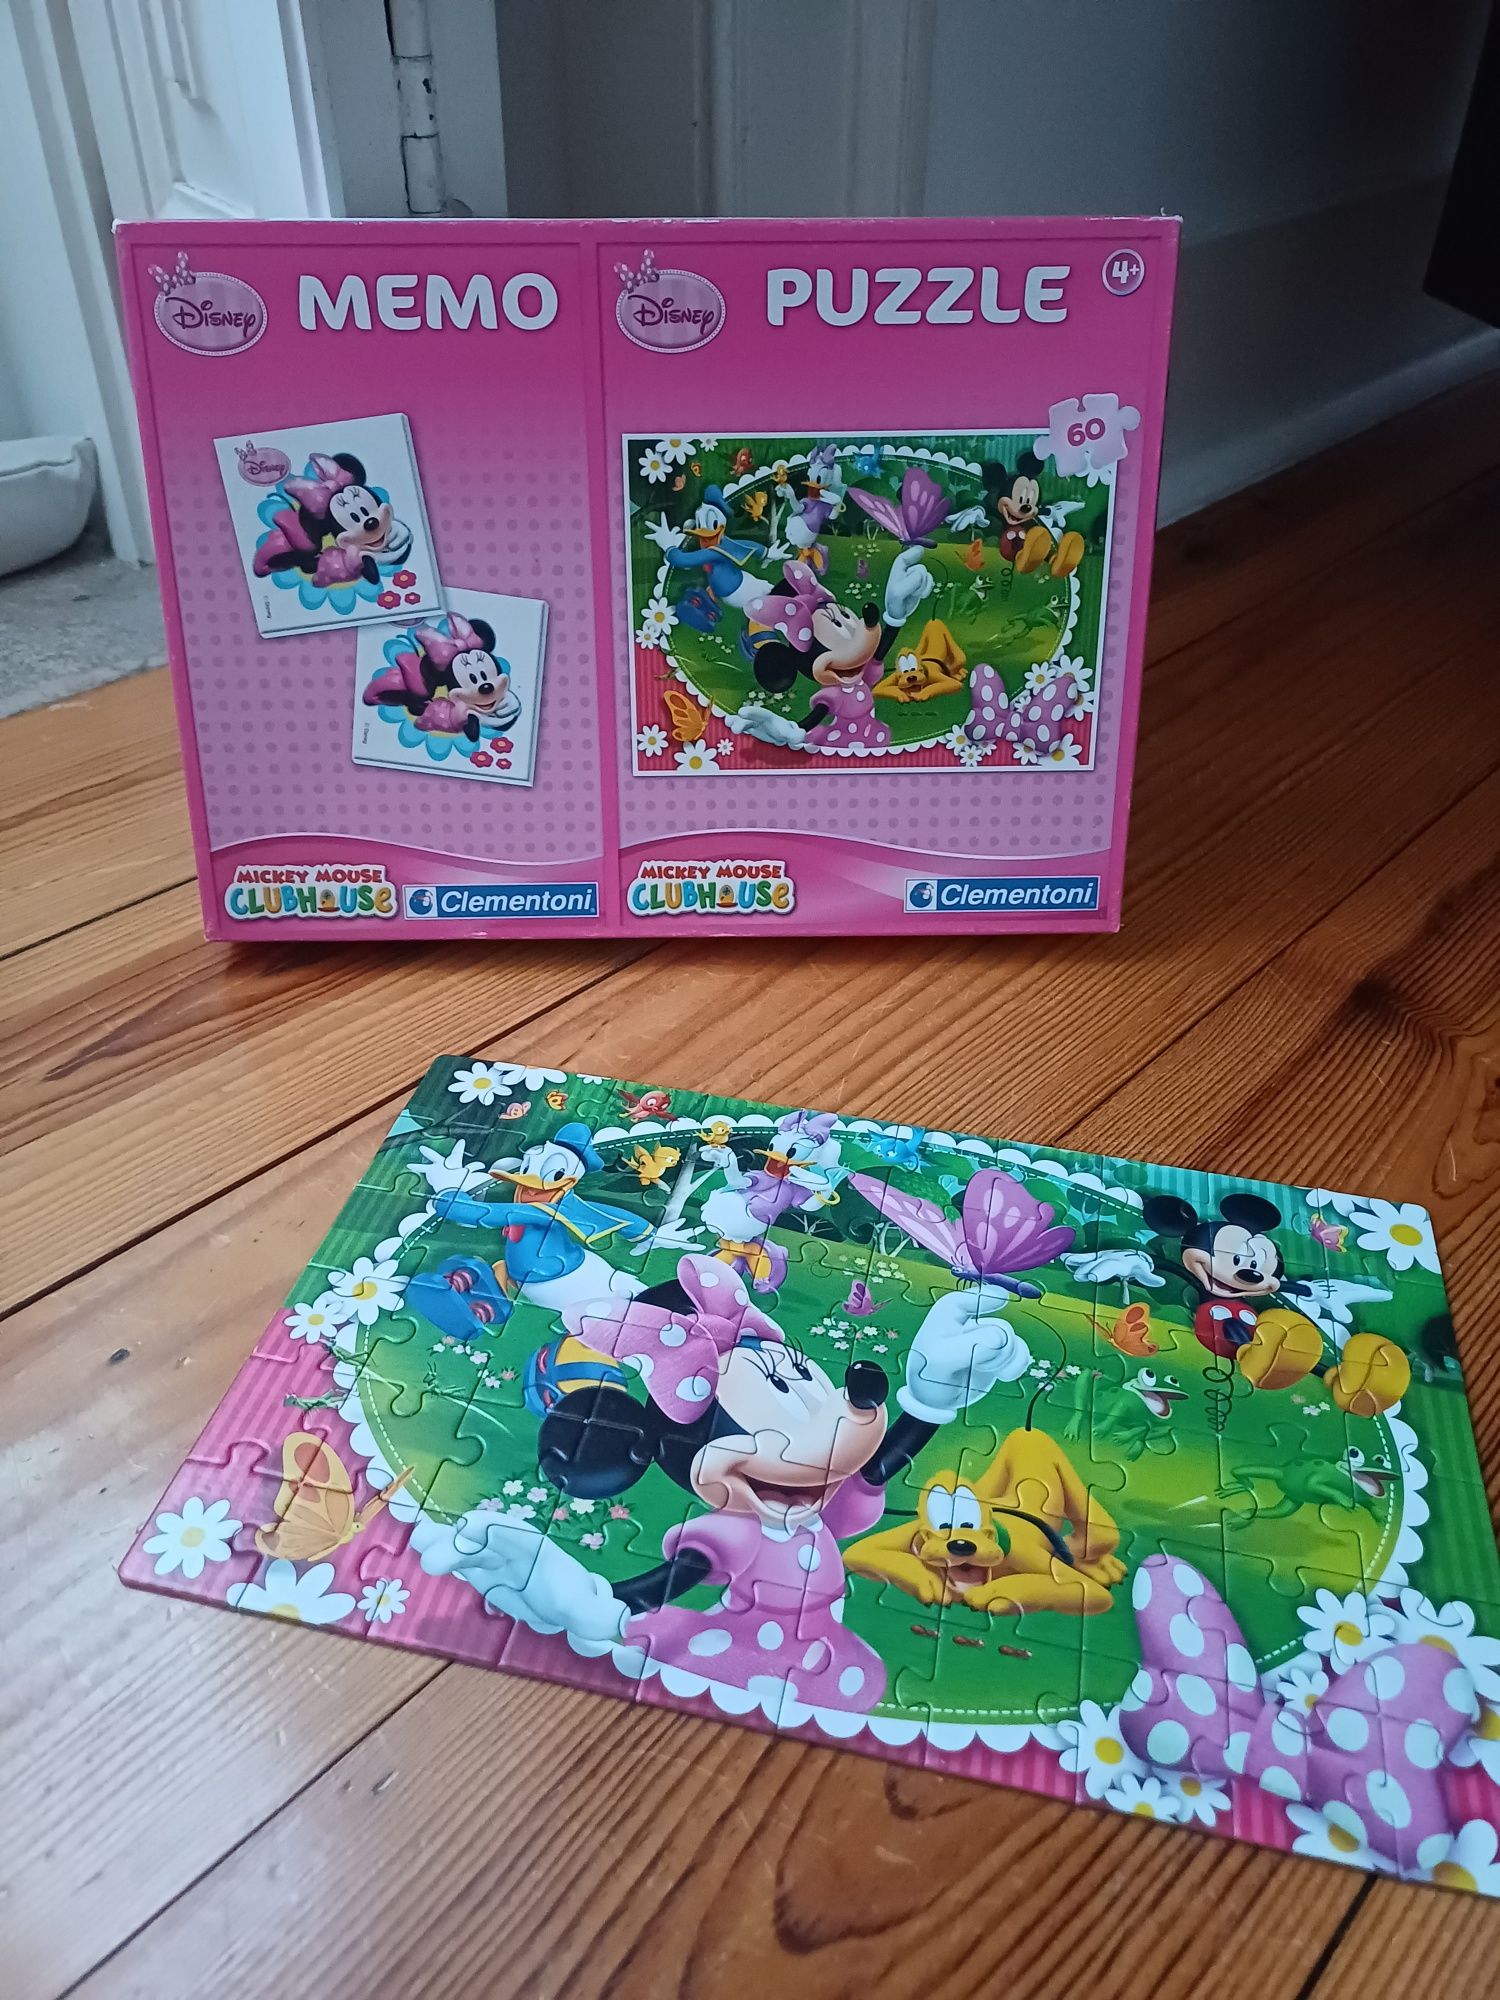 Memo + Puzzle 60 peças da Minnie Mouse da marca Clementoni